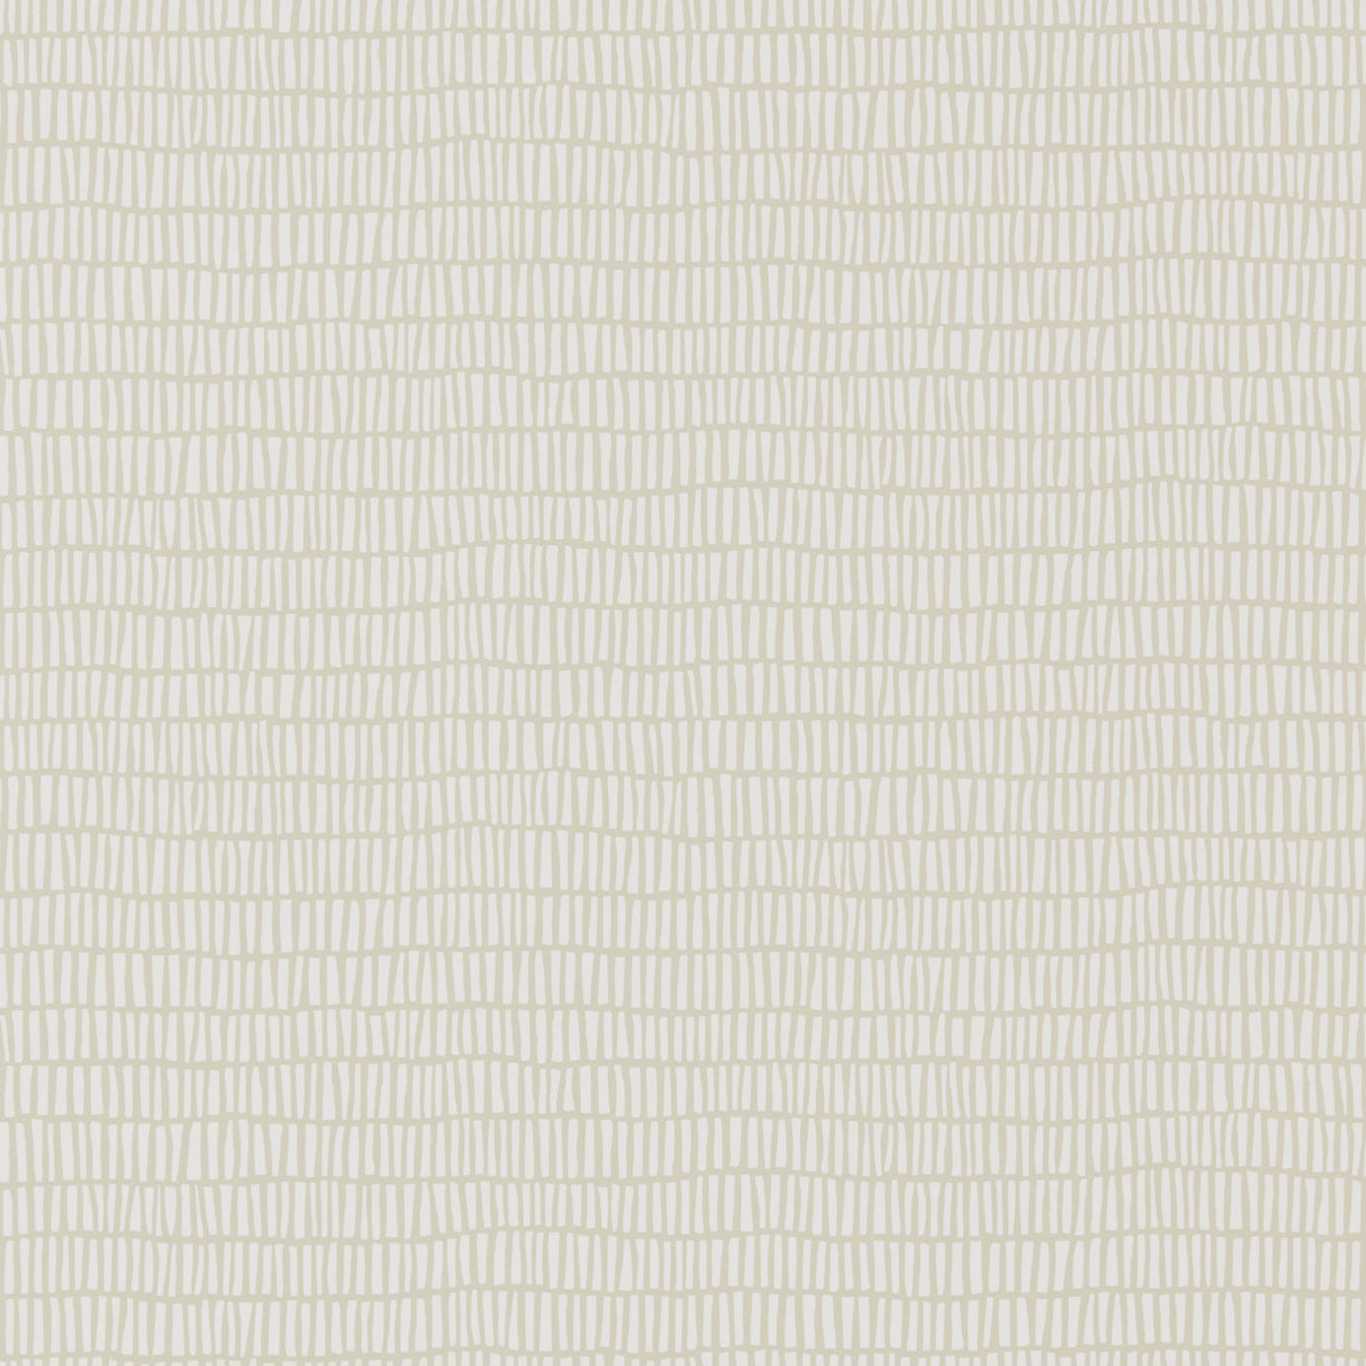 Tocca Linen Wallpaper NLOH111319 by Scion